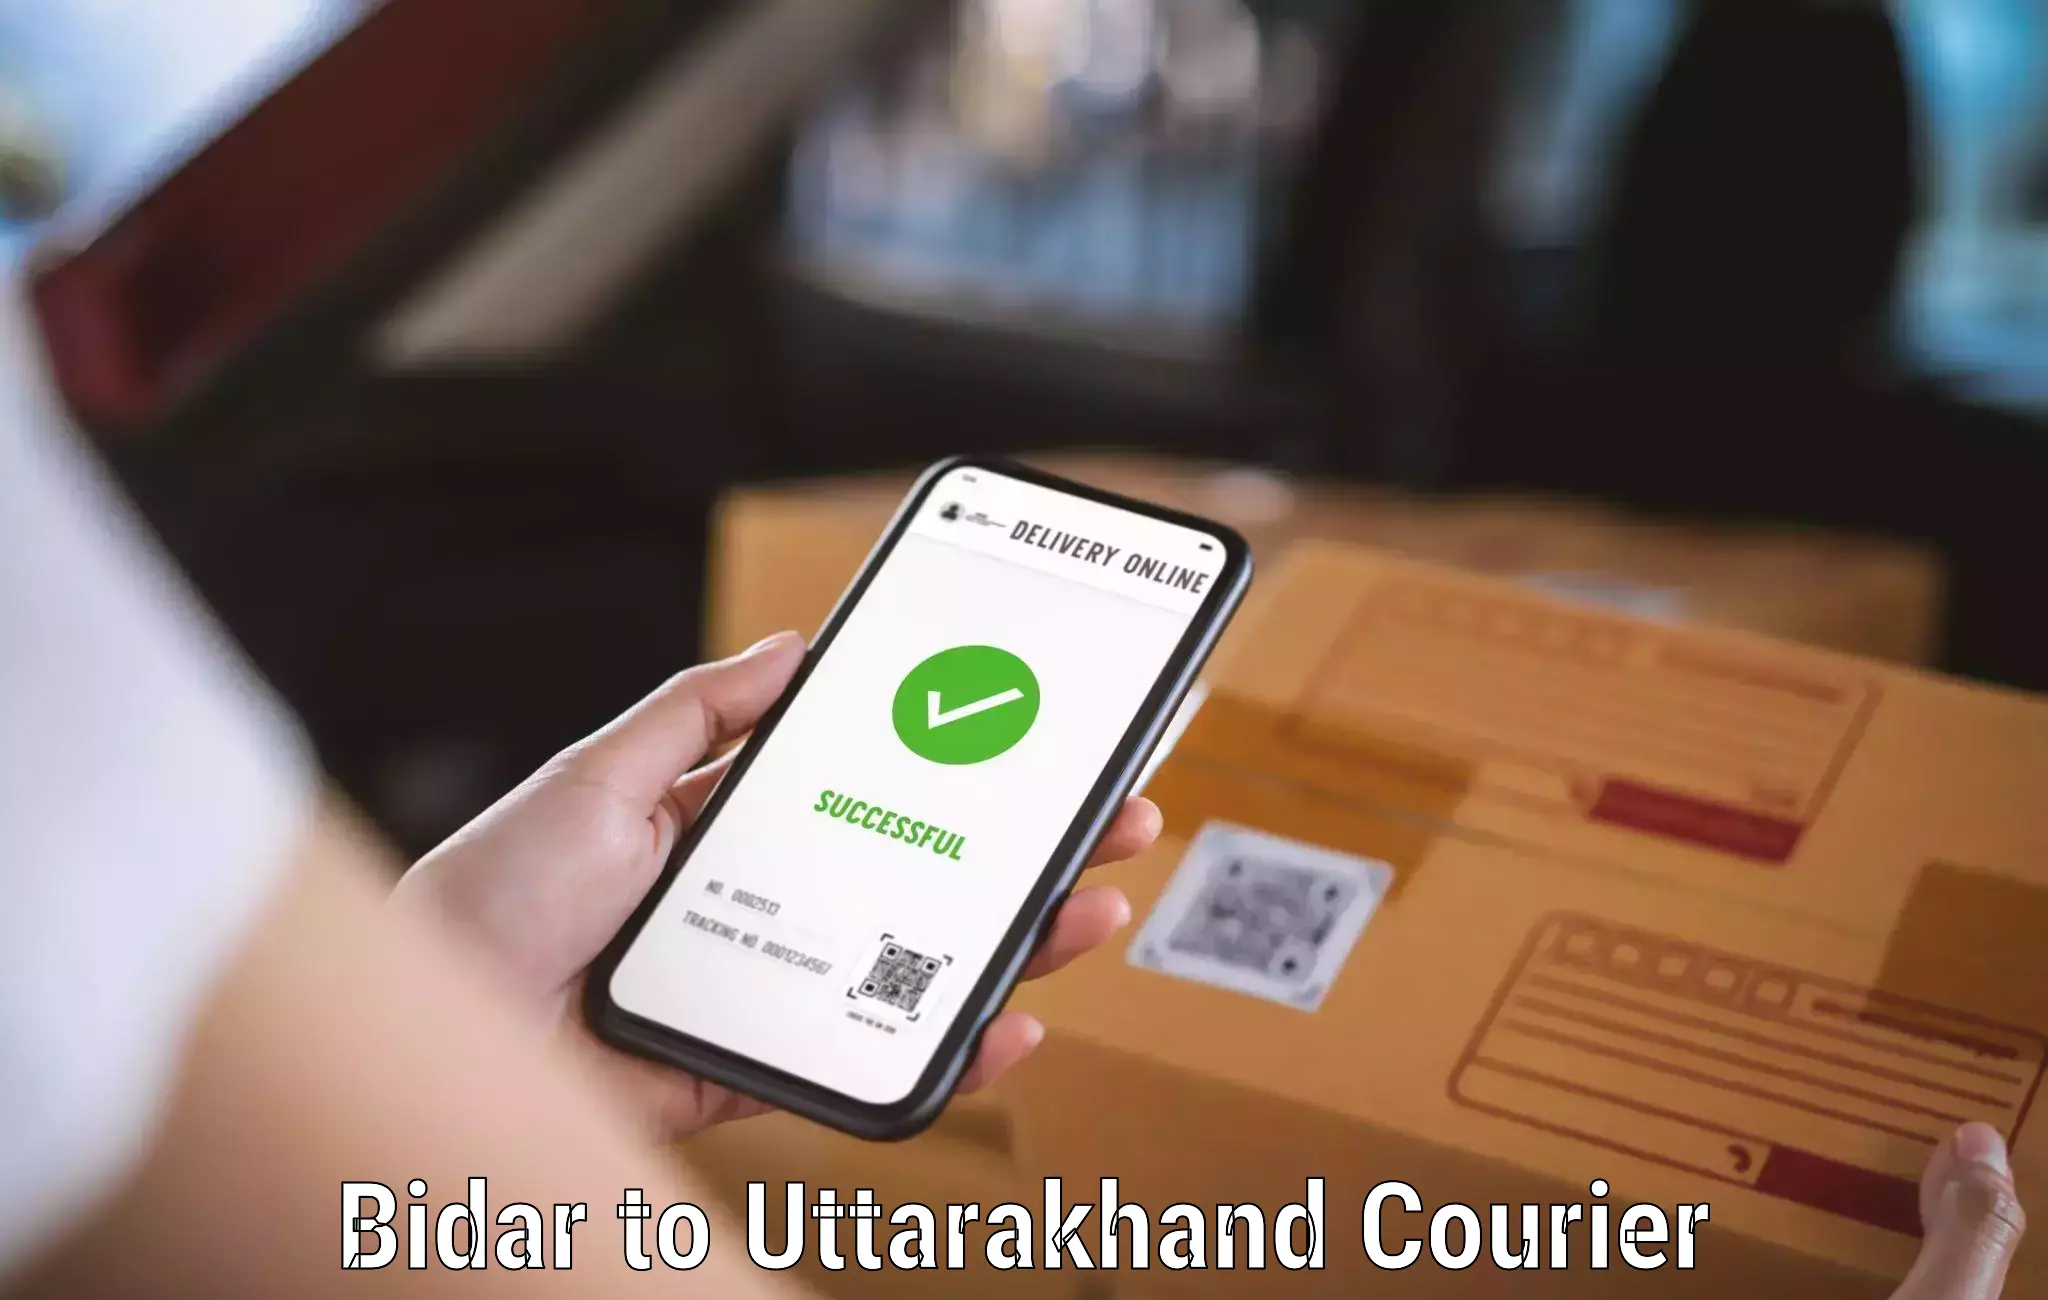 Multi-service courier options Bidar to Rishikesh